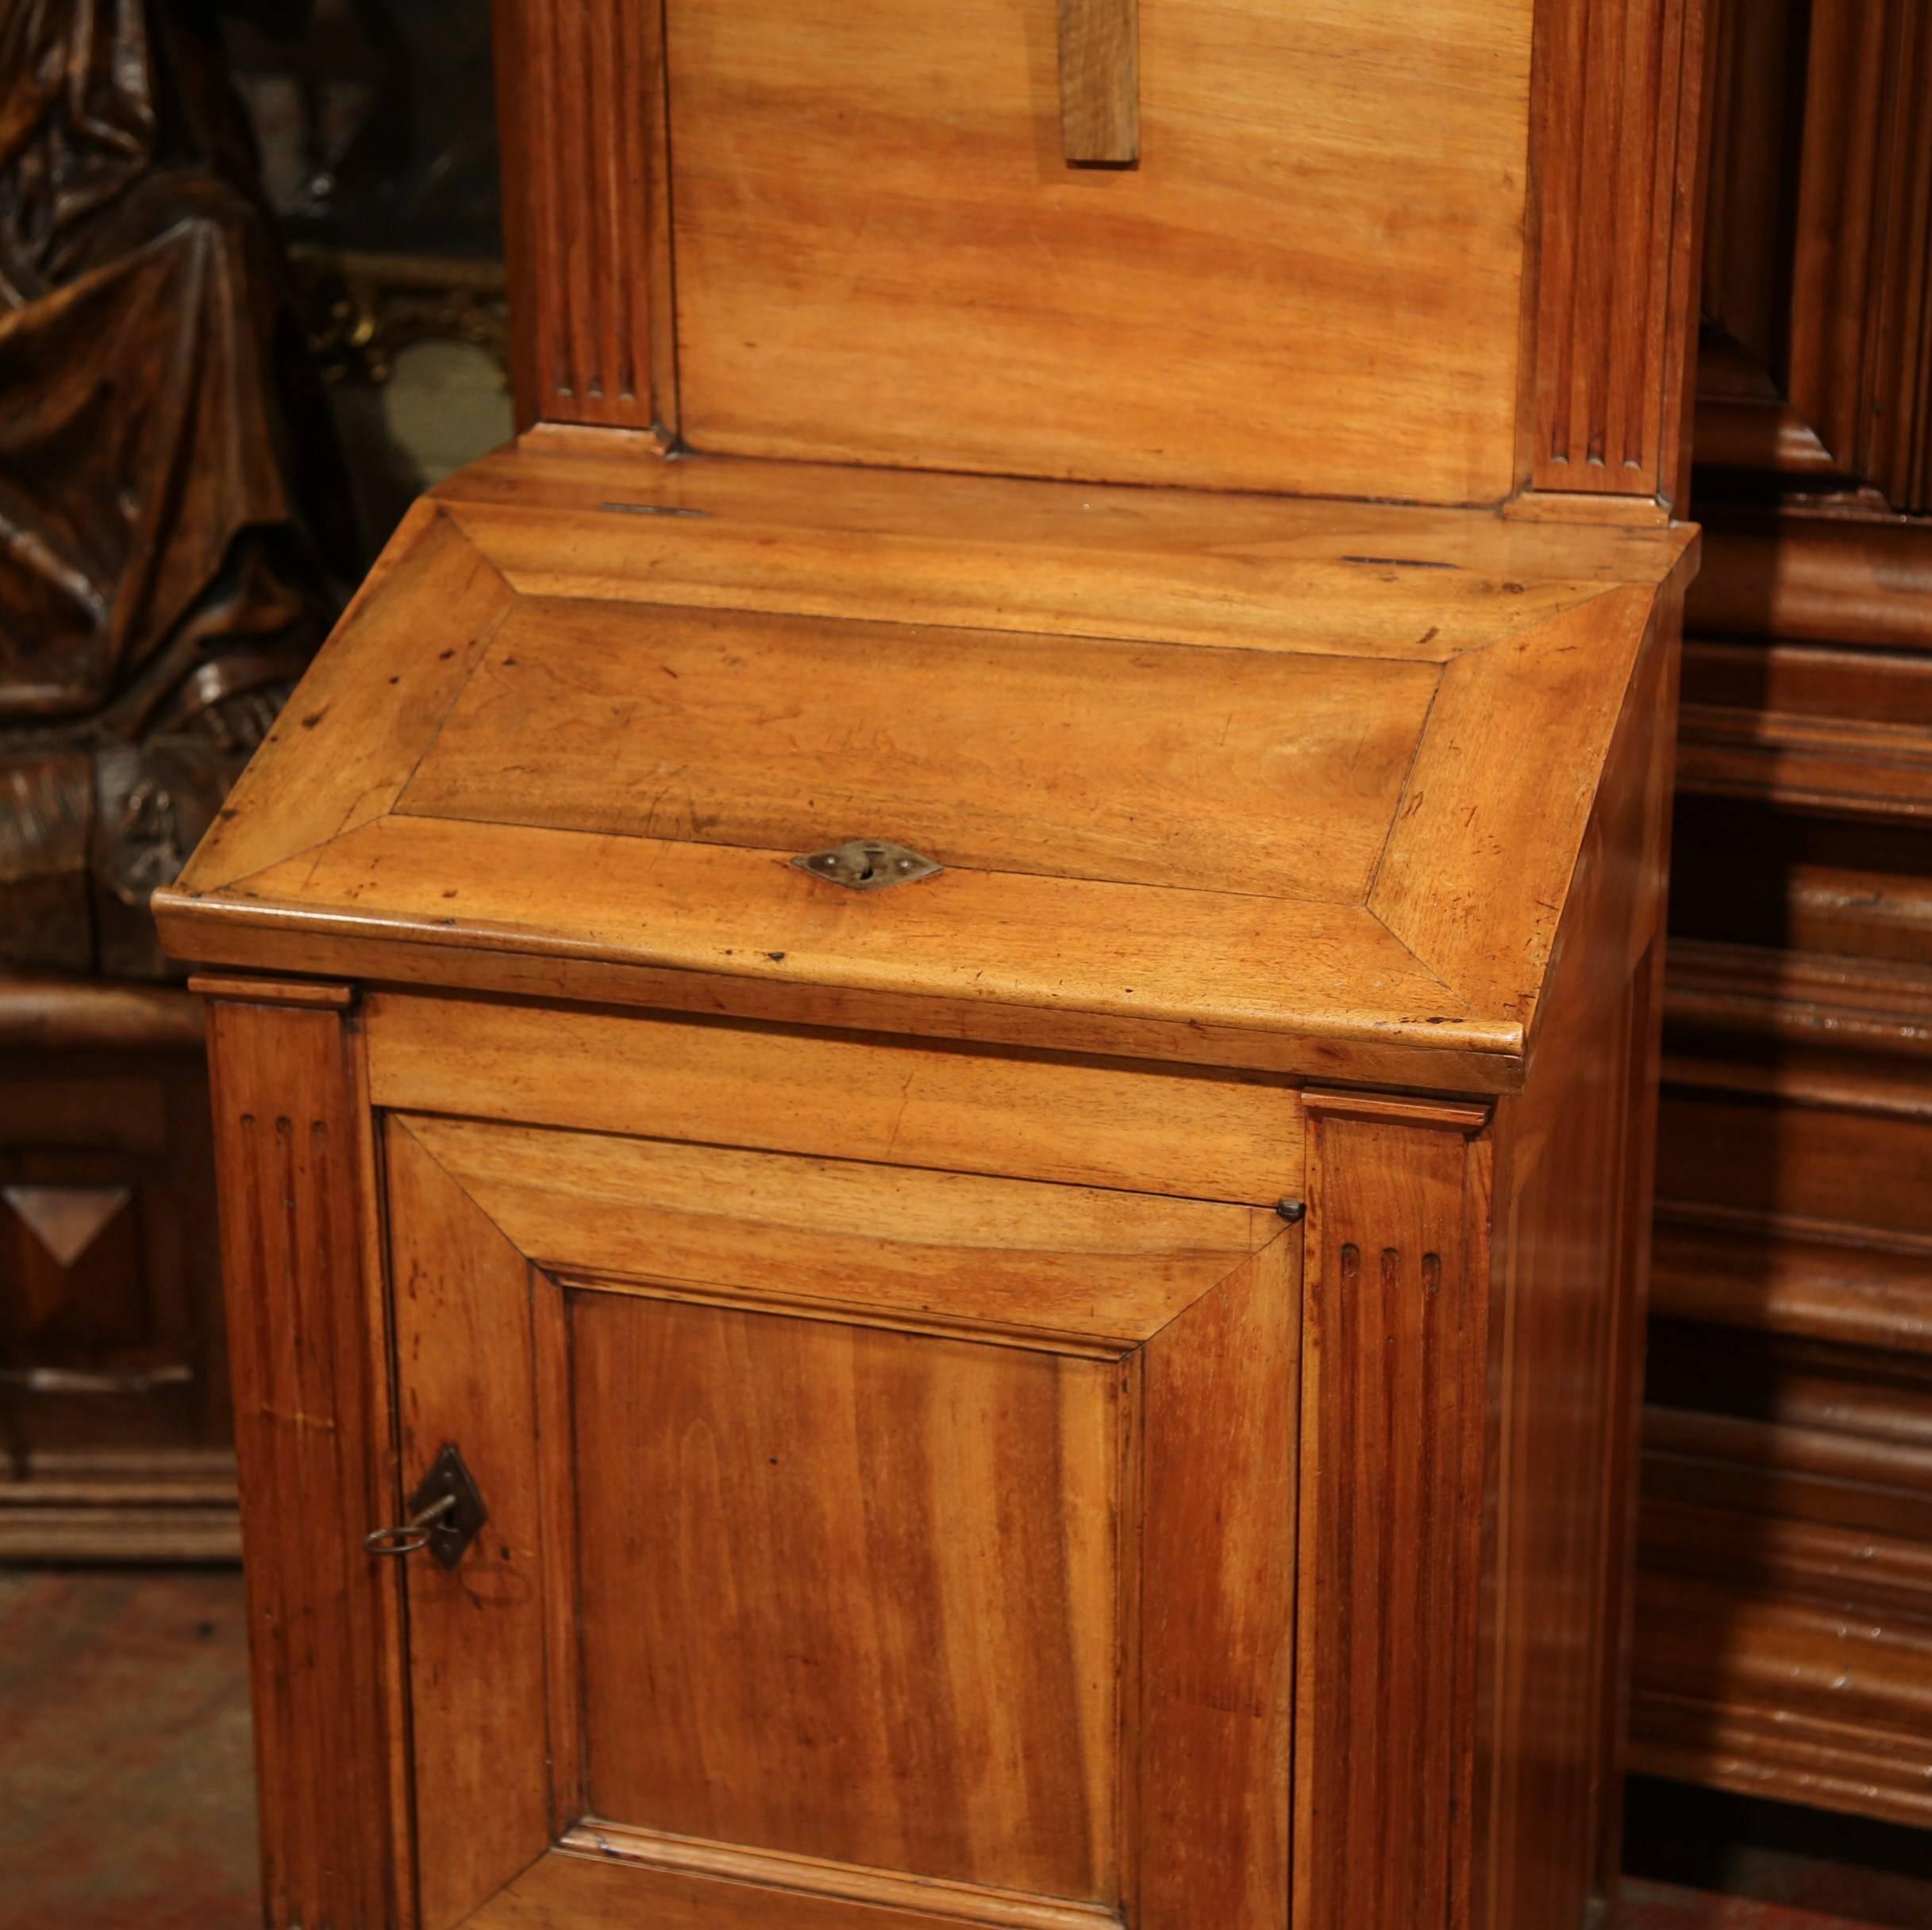 18th Century French Carved Walnut Oratoire Prayer Bench Cabinet from Burgundy (18. Jahrhundert)